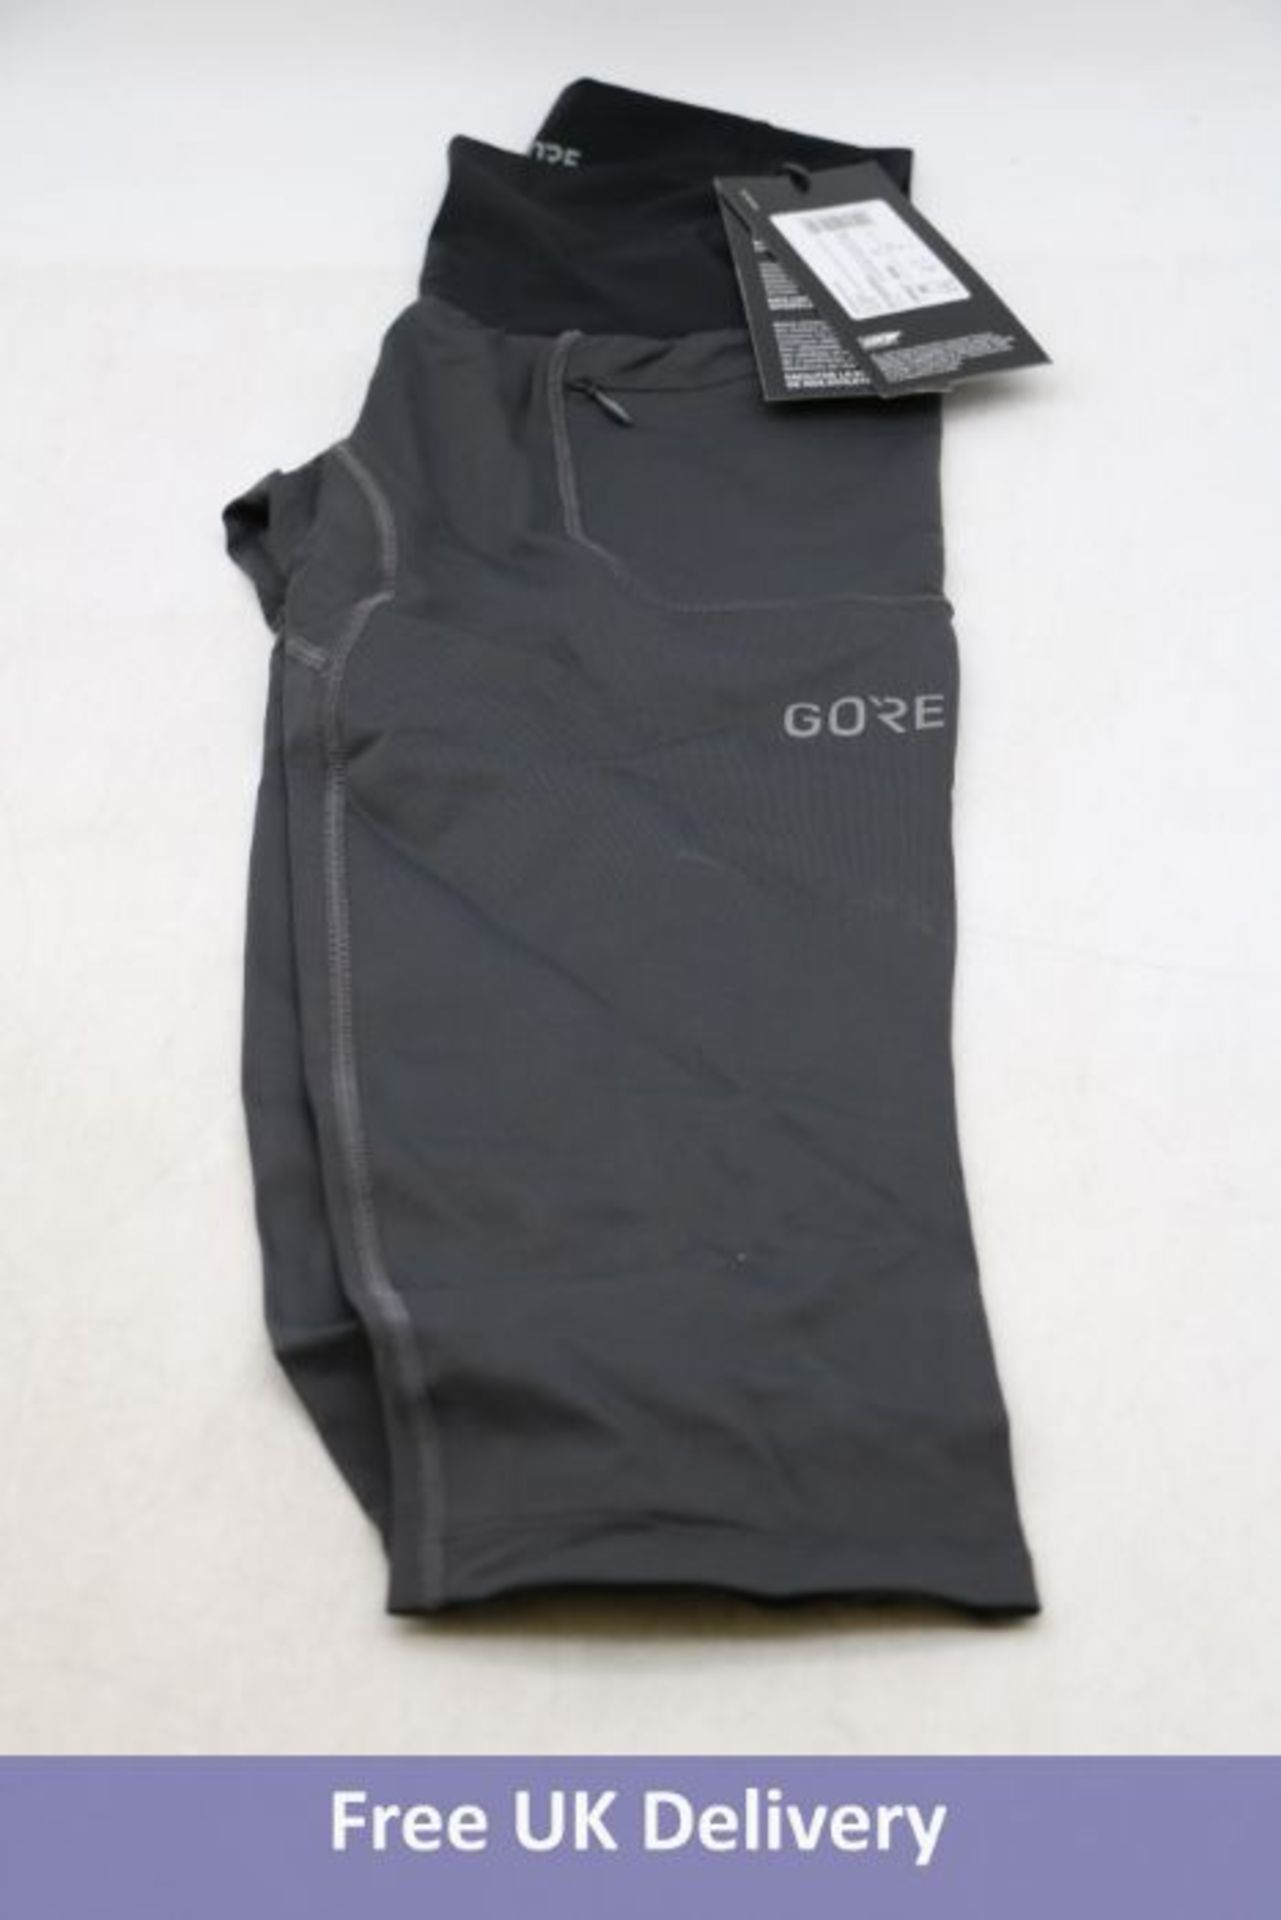 Gore Wear Men's 3/4 Tights Grey/Black, EU Size 36